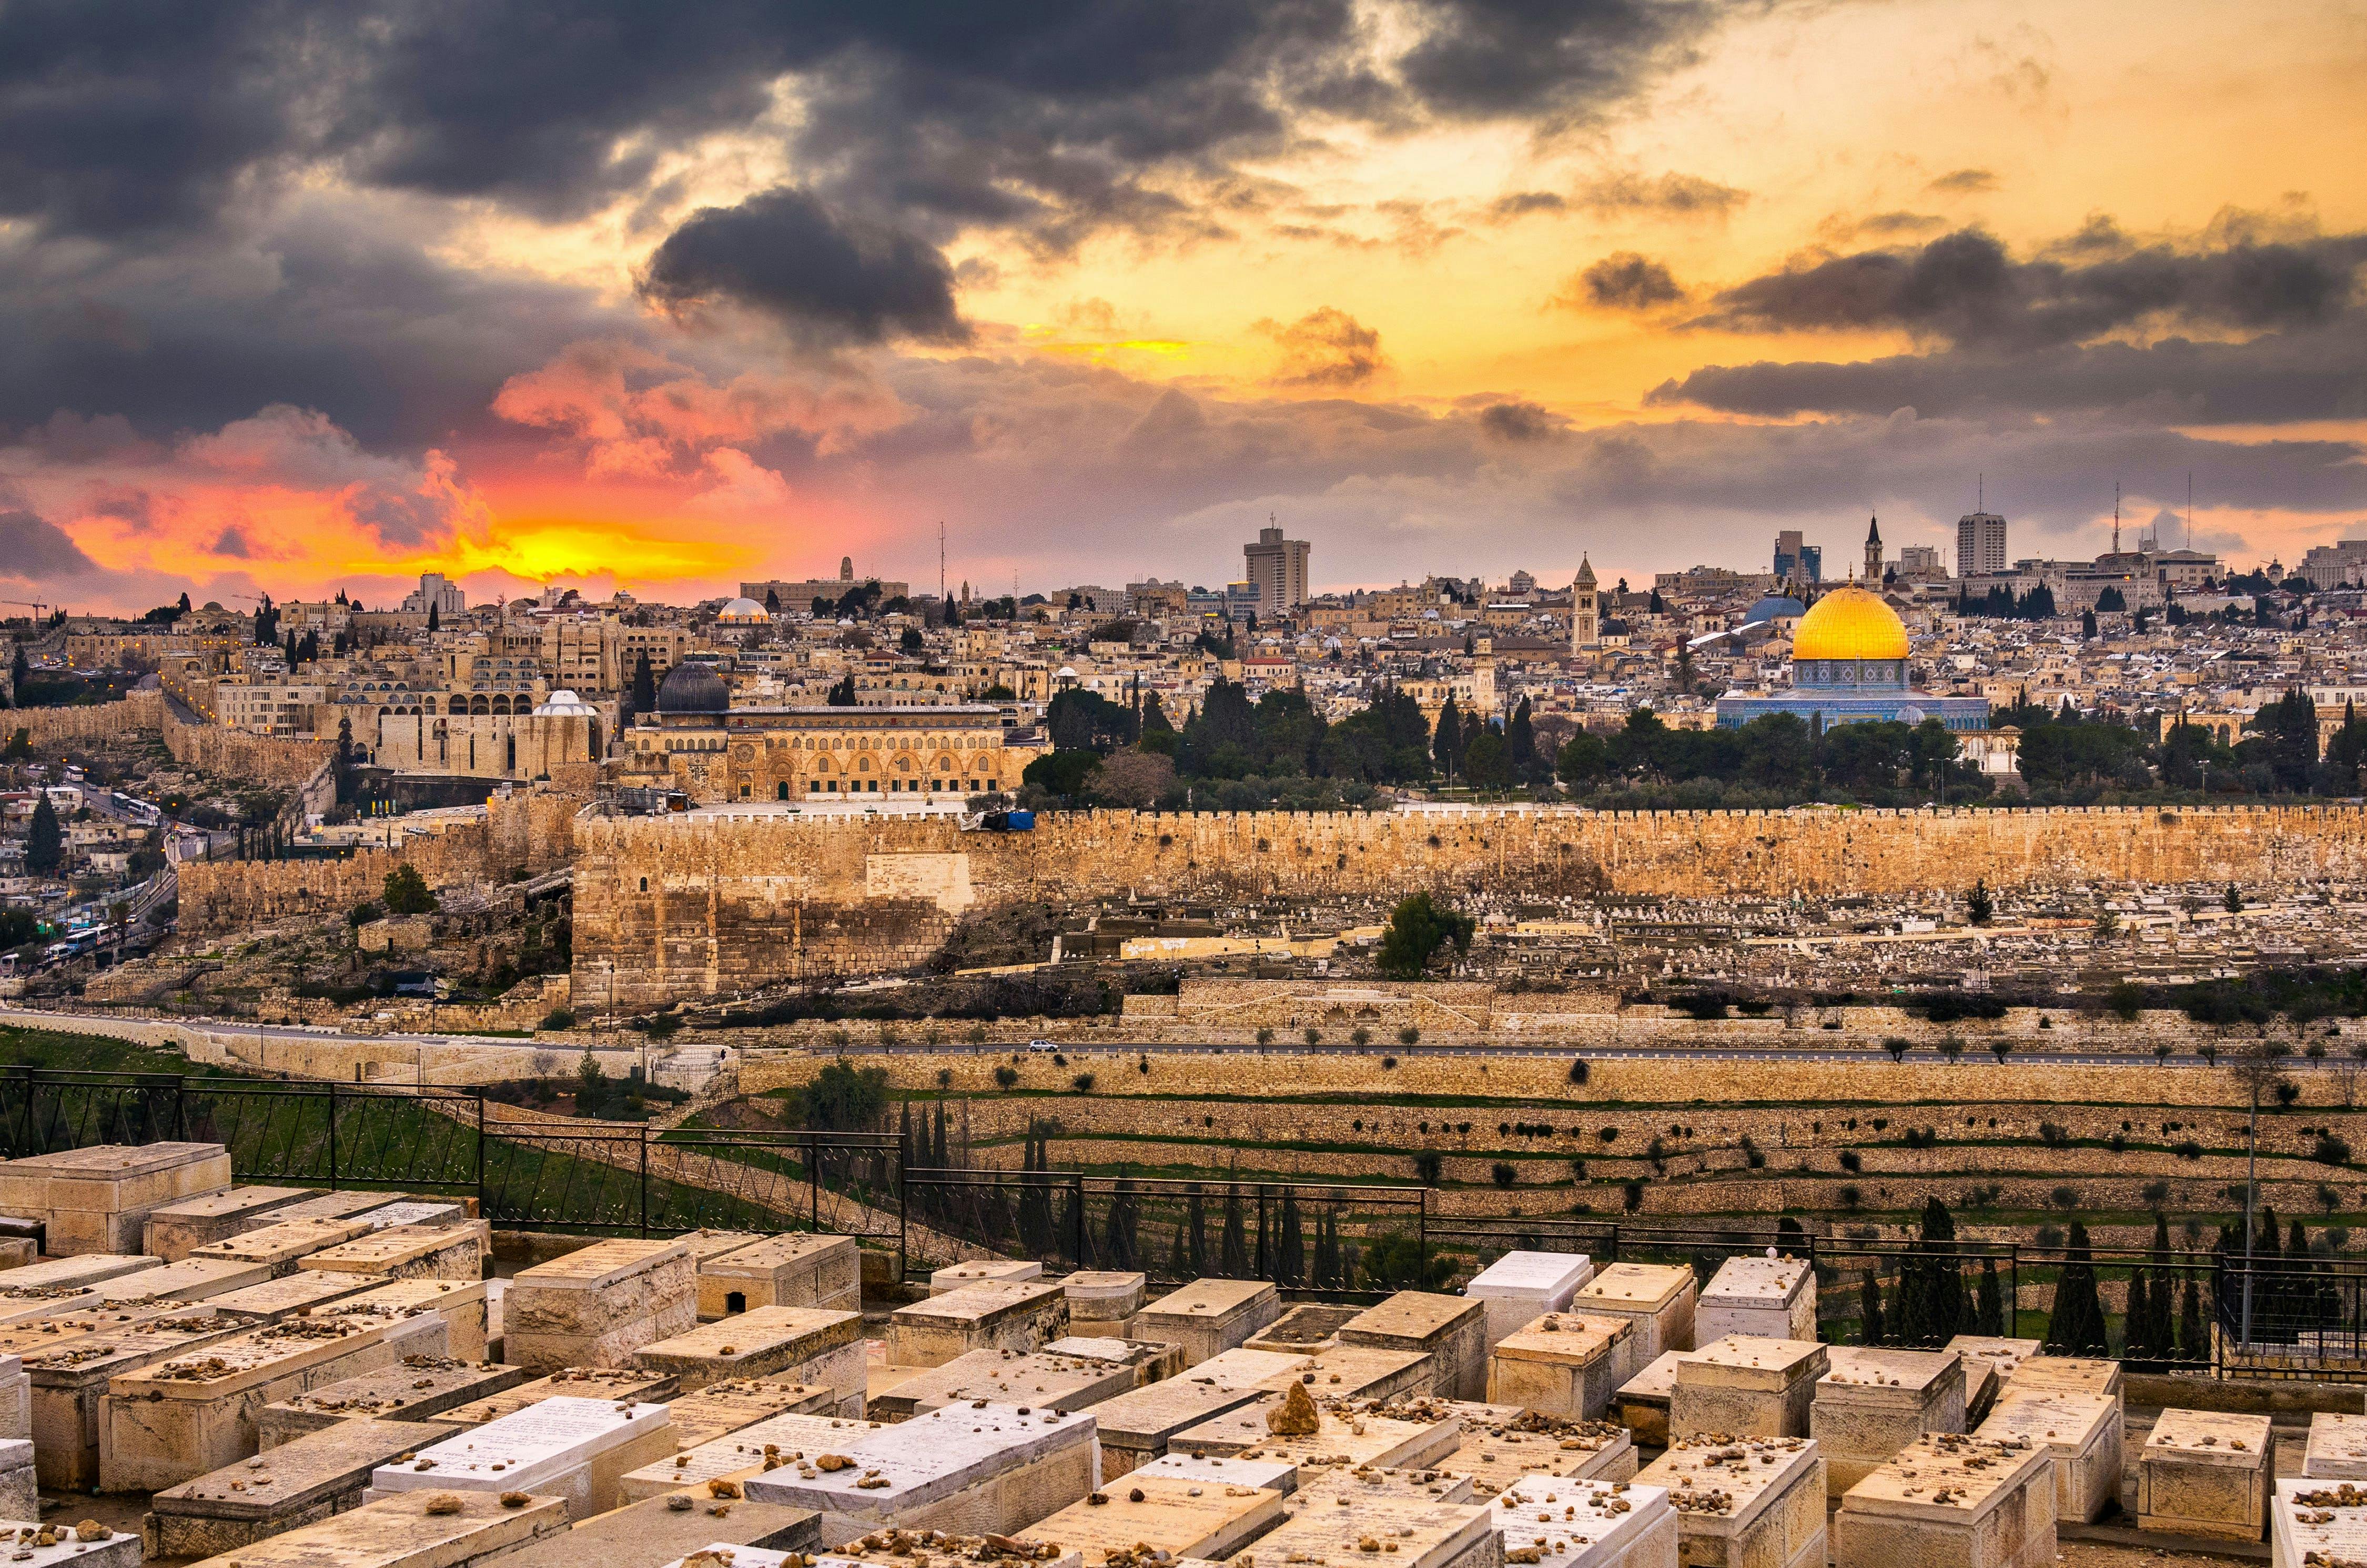 Jeruzalem: rondleiding van een hele dag vanuit Herzliya